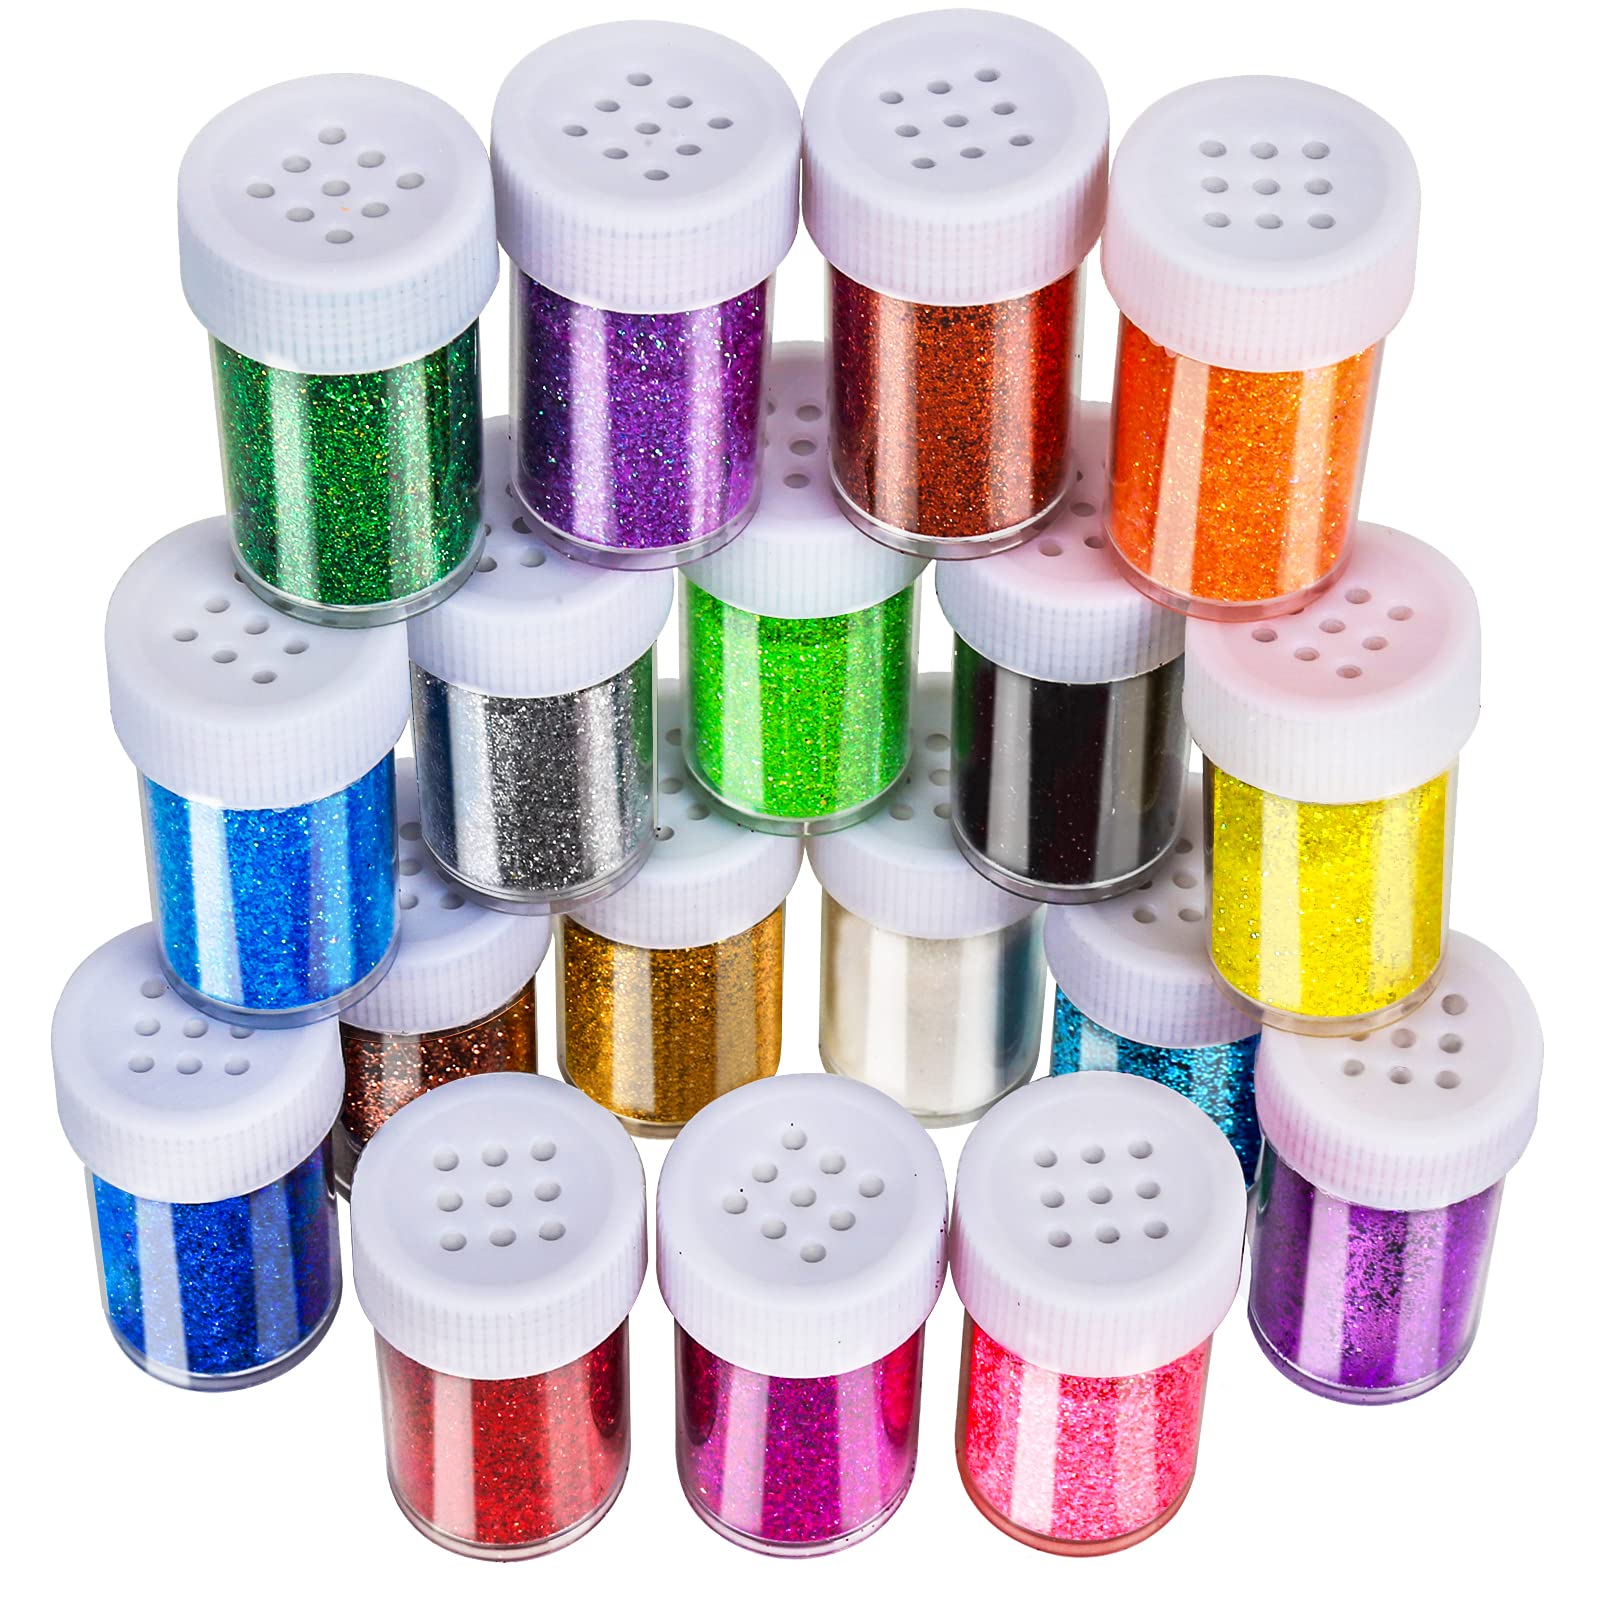 41PCS Resin Supplies Kit, LEOBRO Extra Fine Glitter, Glitter